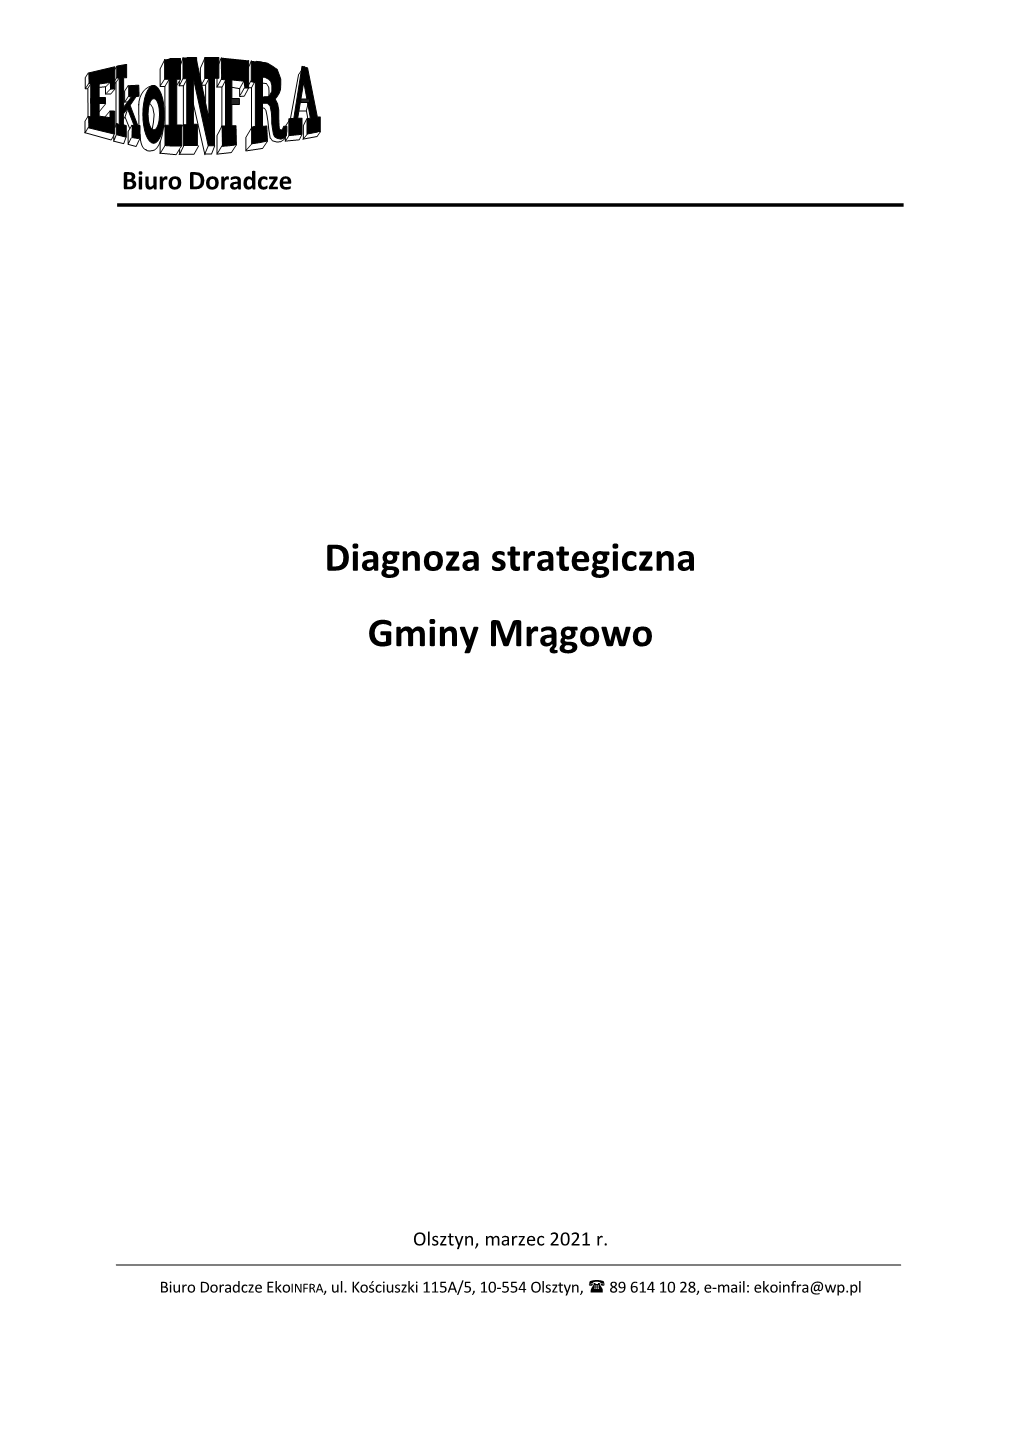 Diagnoza Strategiczna Gminy Mrągowo